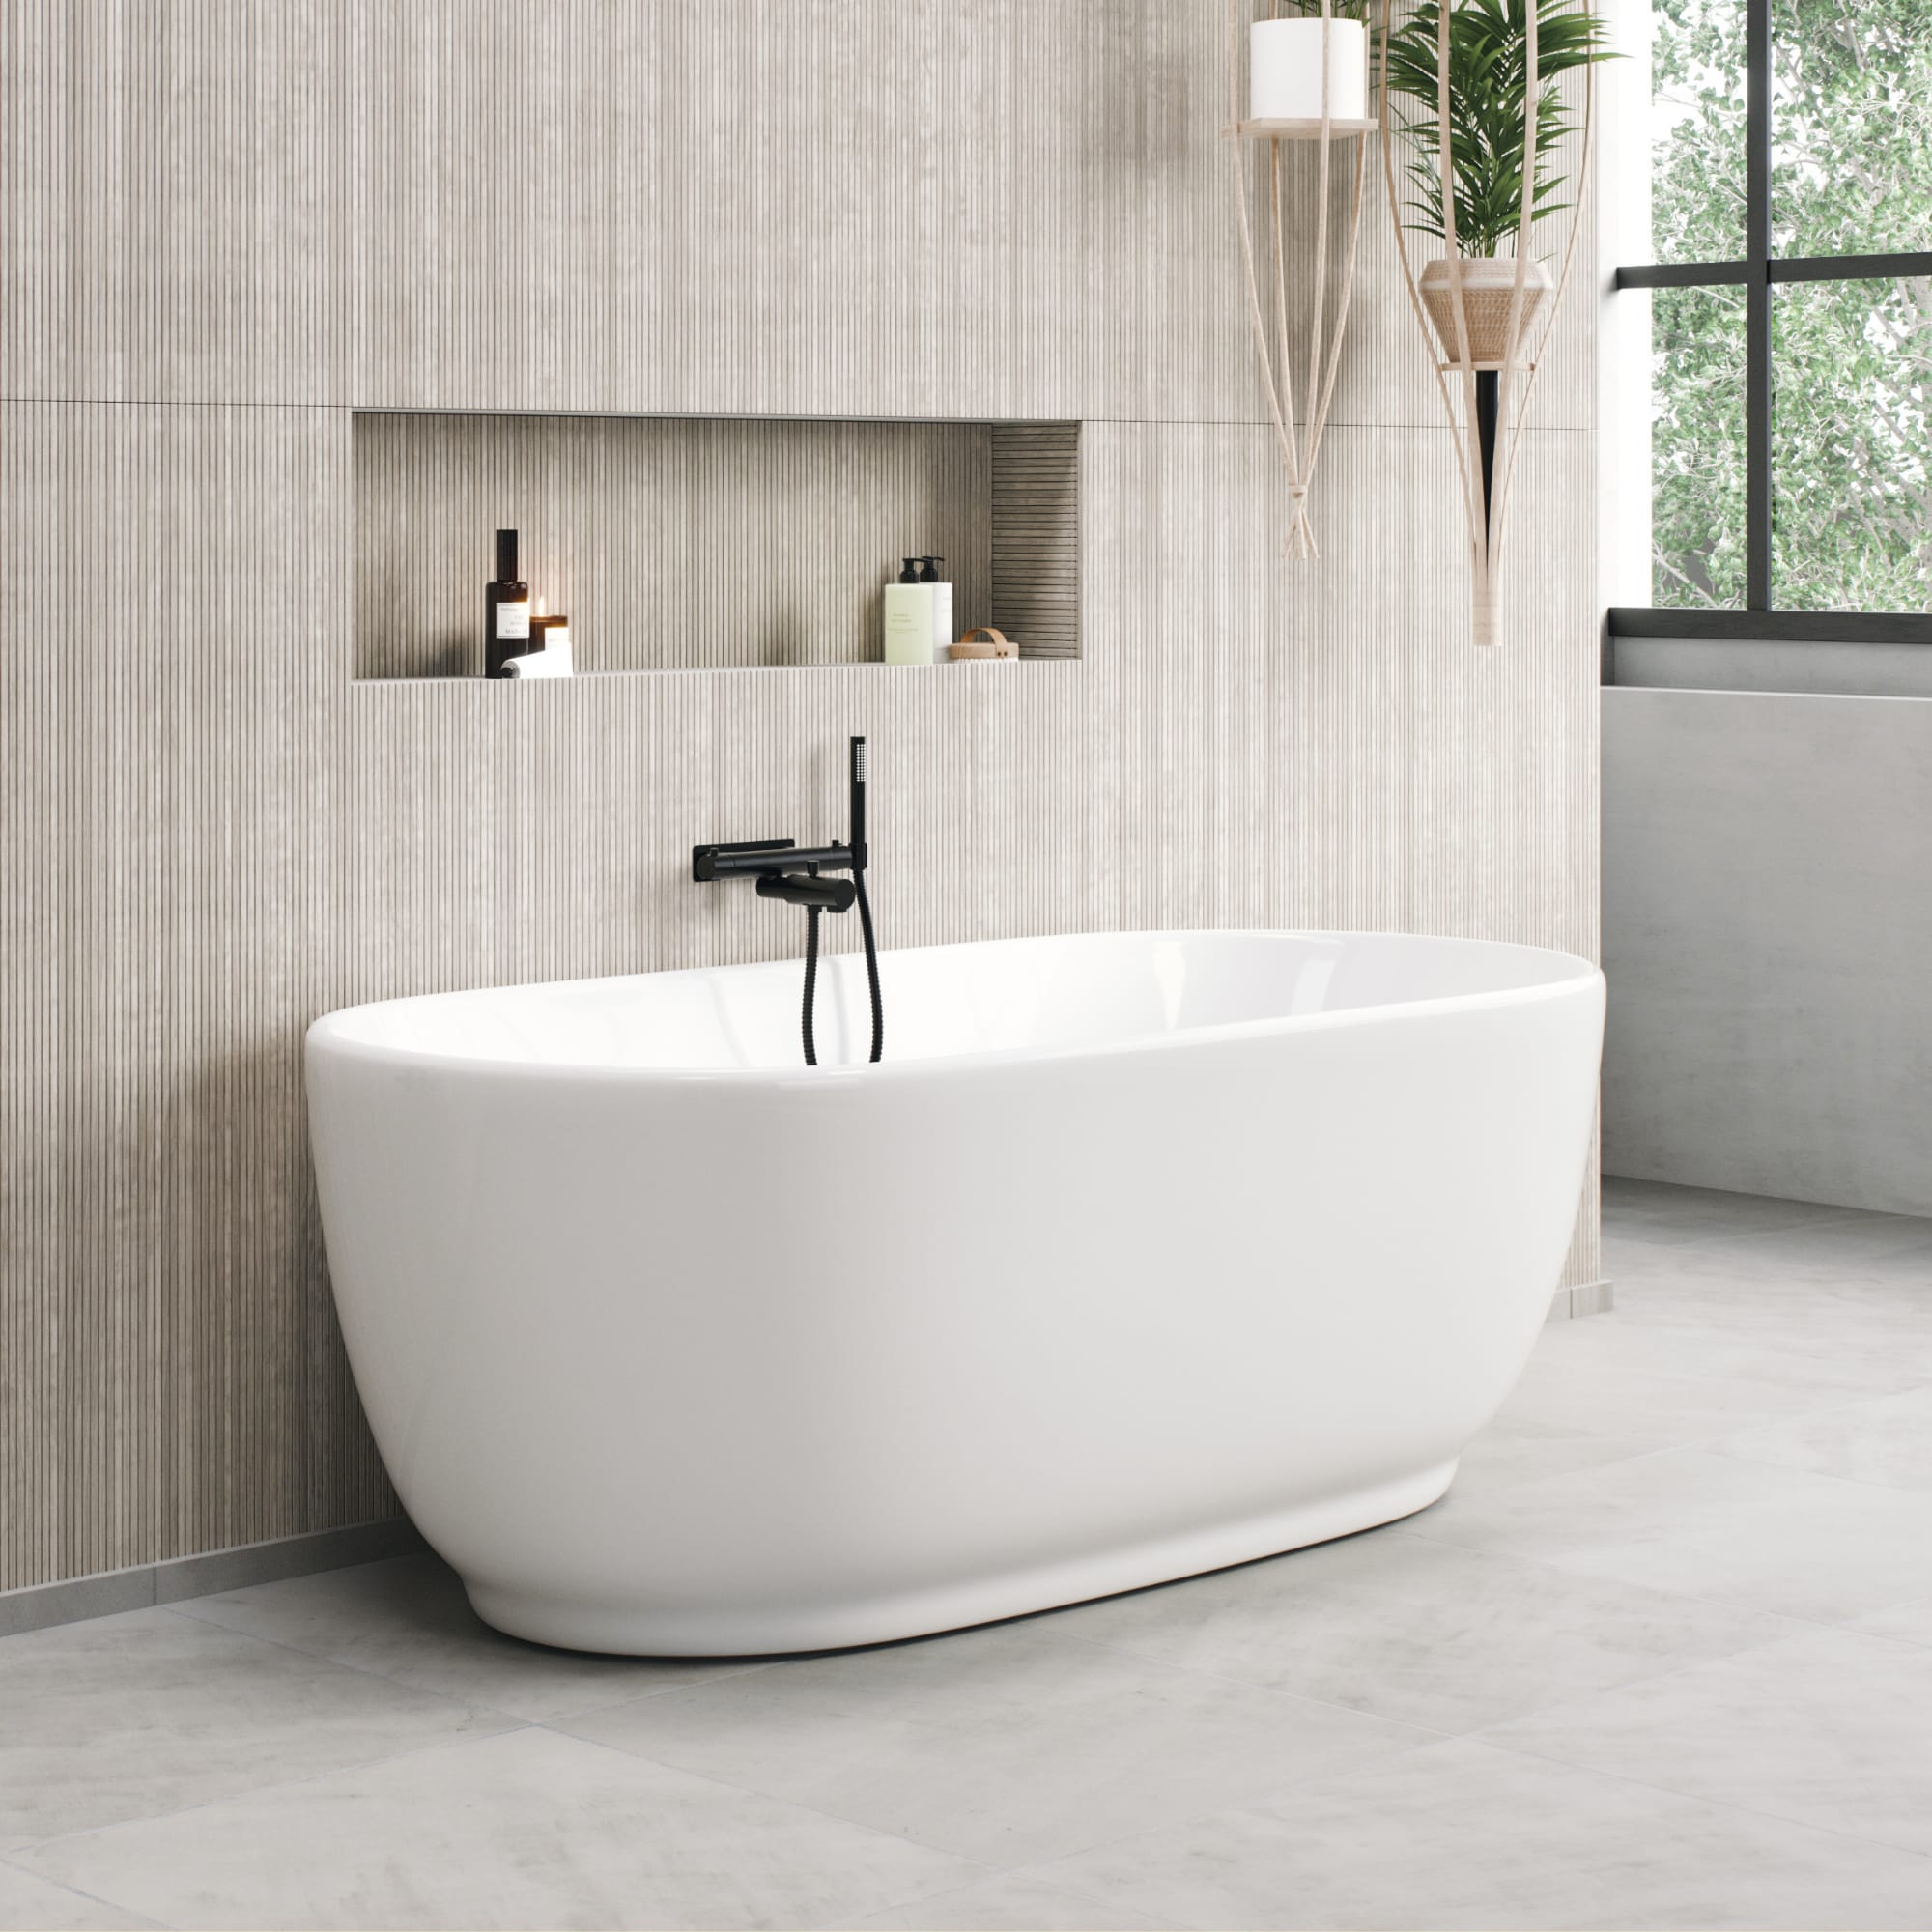 vitt fristående badkar 170cm i beiget badrum ribbad panel badrum